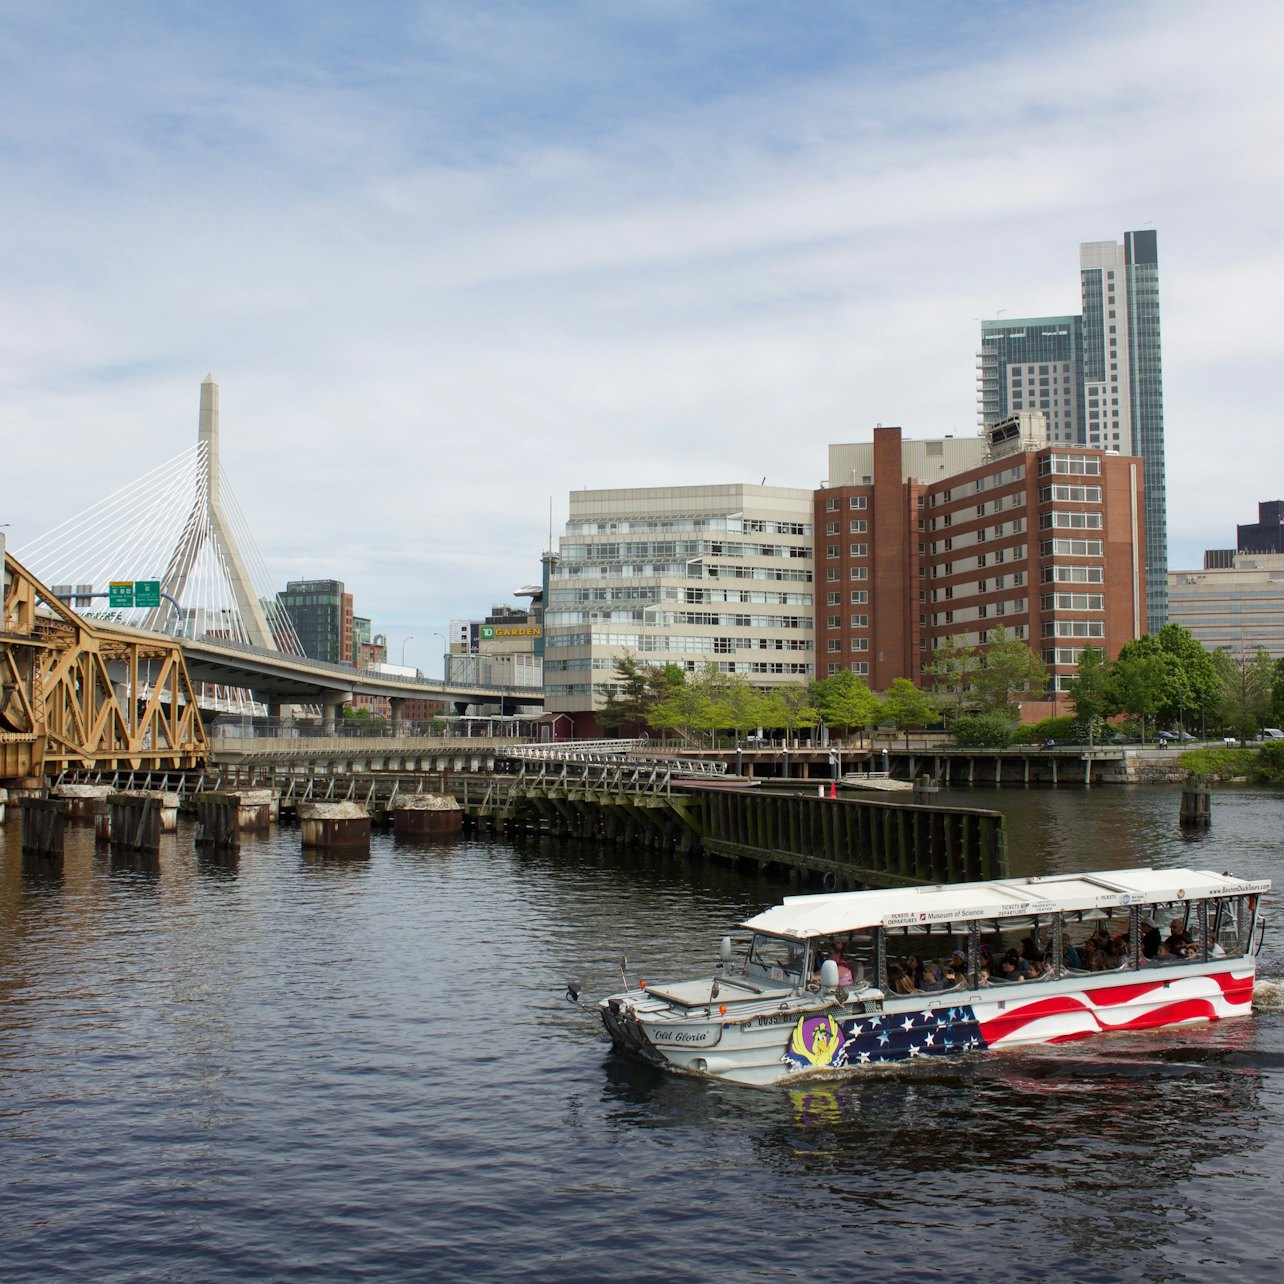 Boston Duck Tours - Alojamientos en Boston